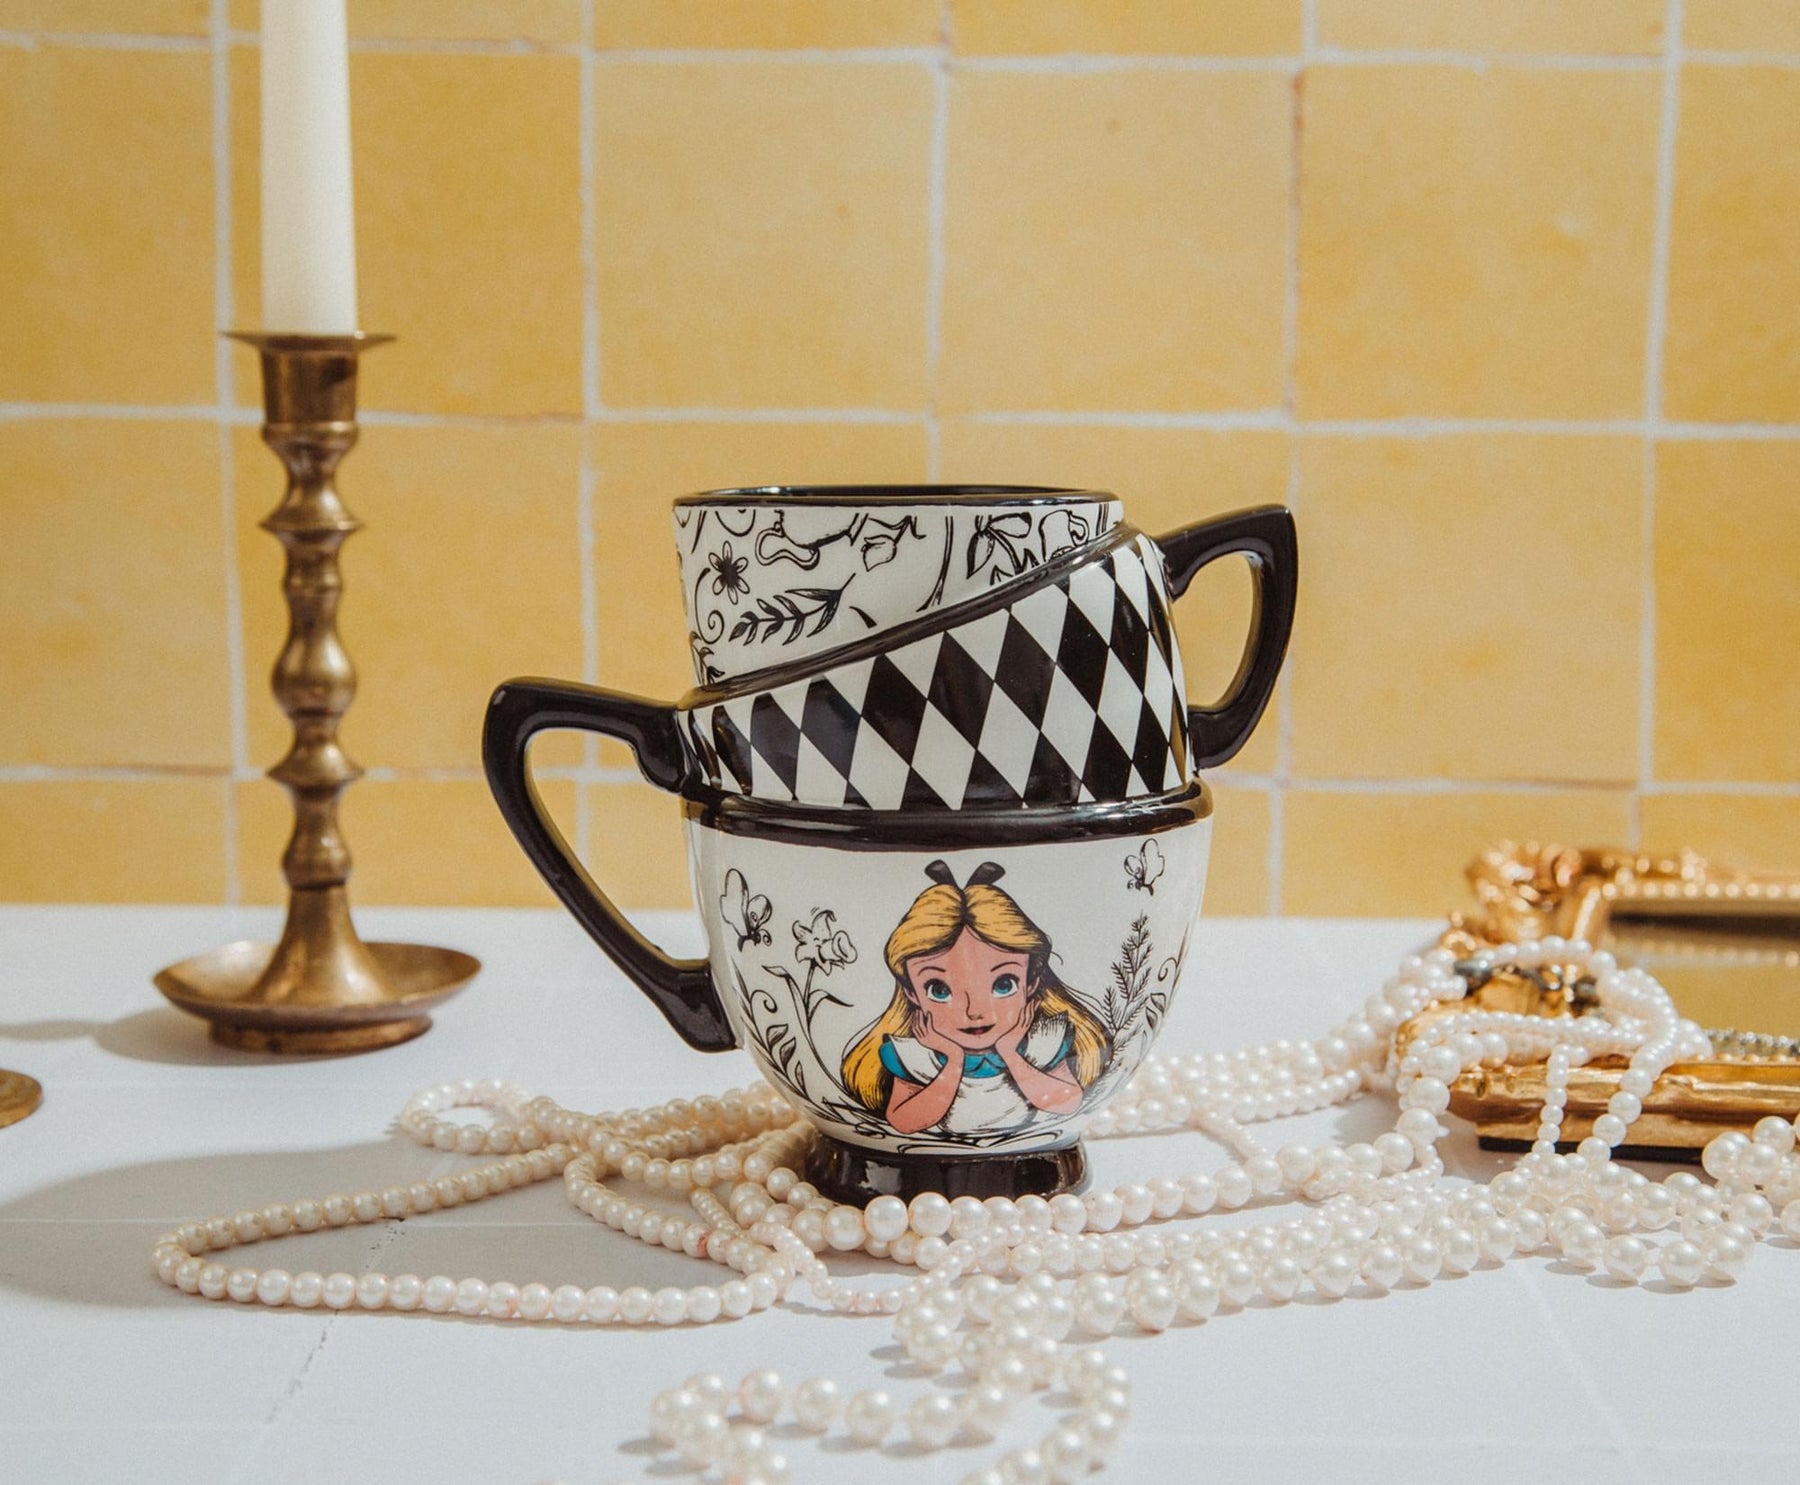 Disney Alice in Wonderland World of My Own Ceramic Teacup and Saucer Set